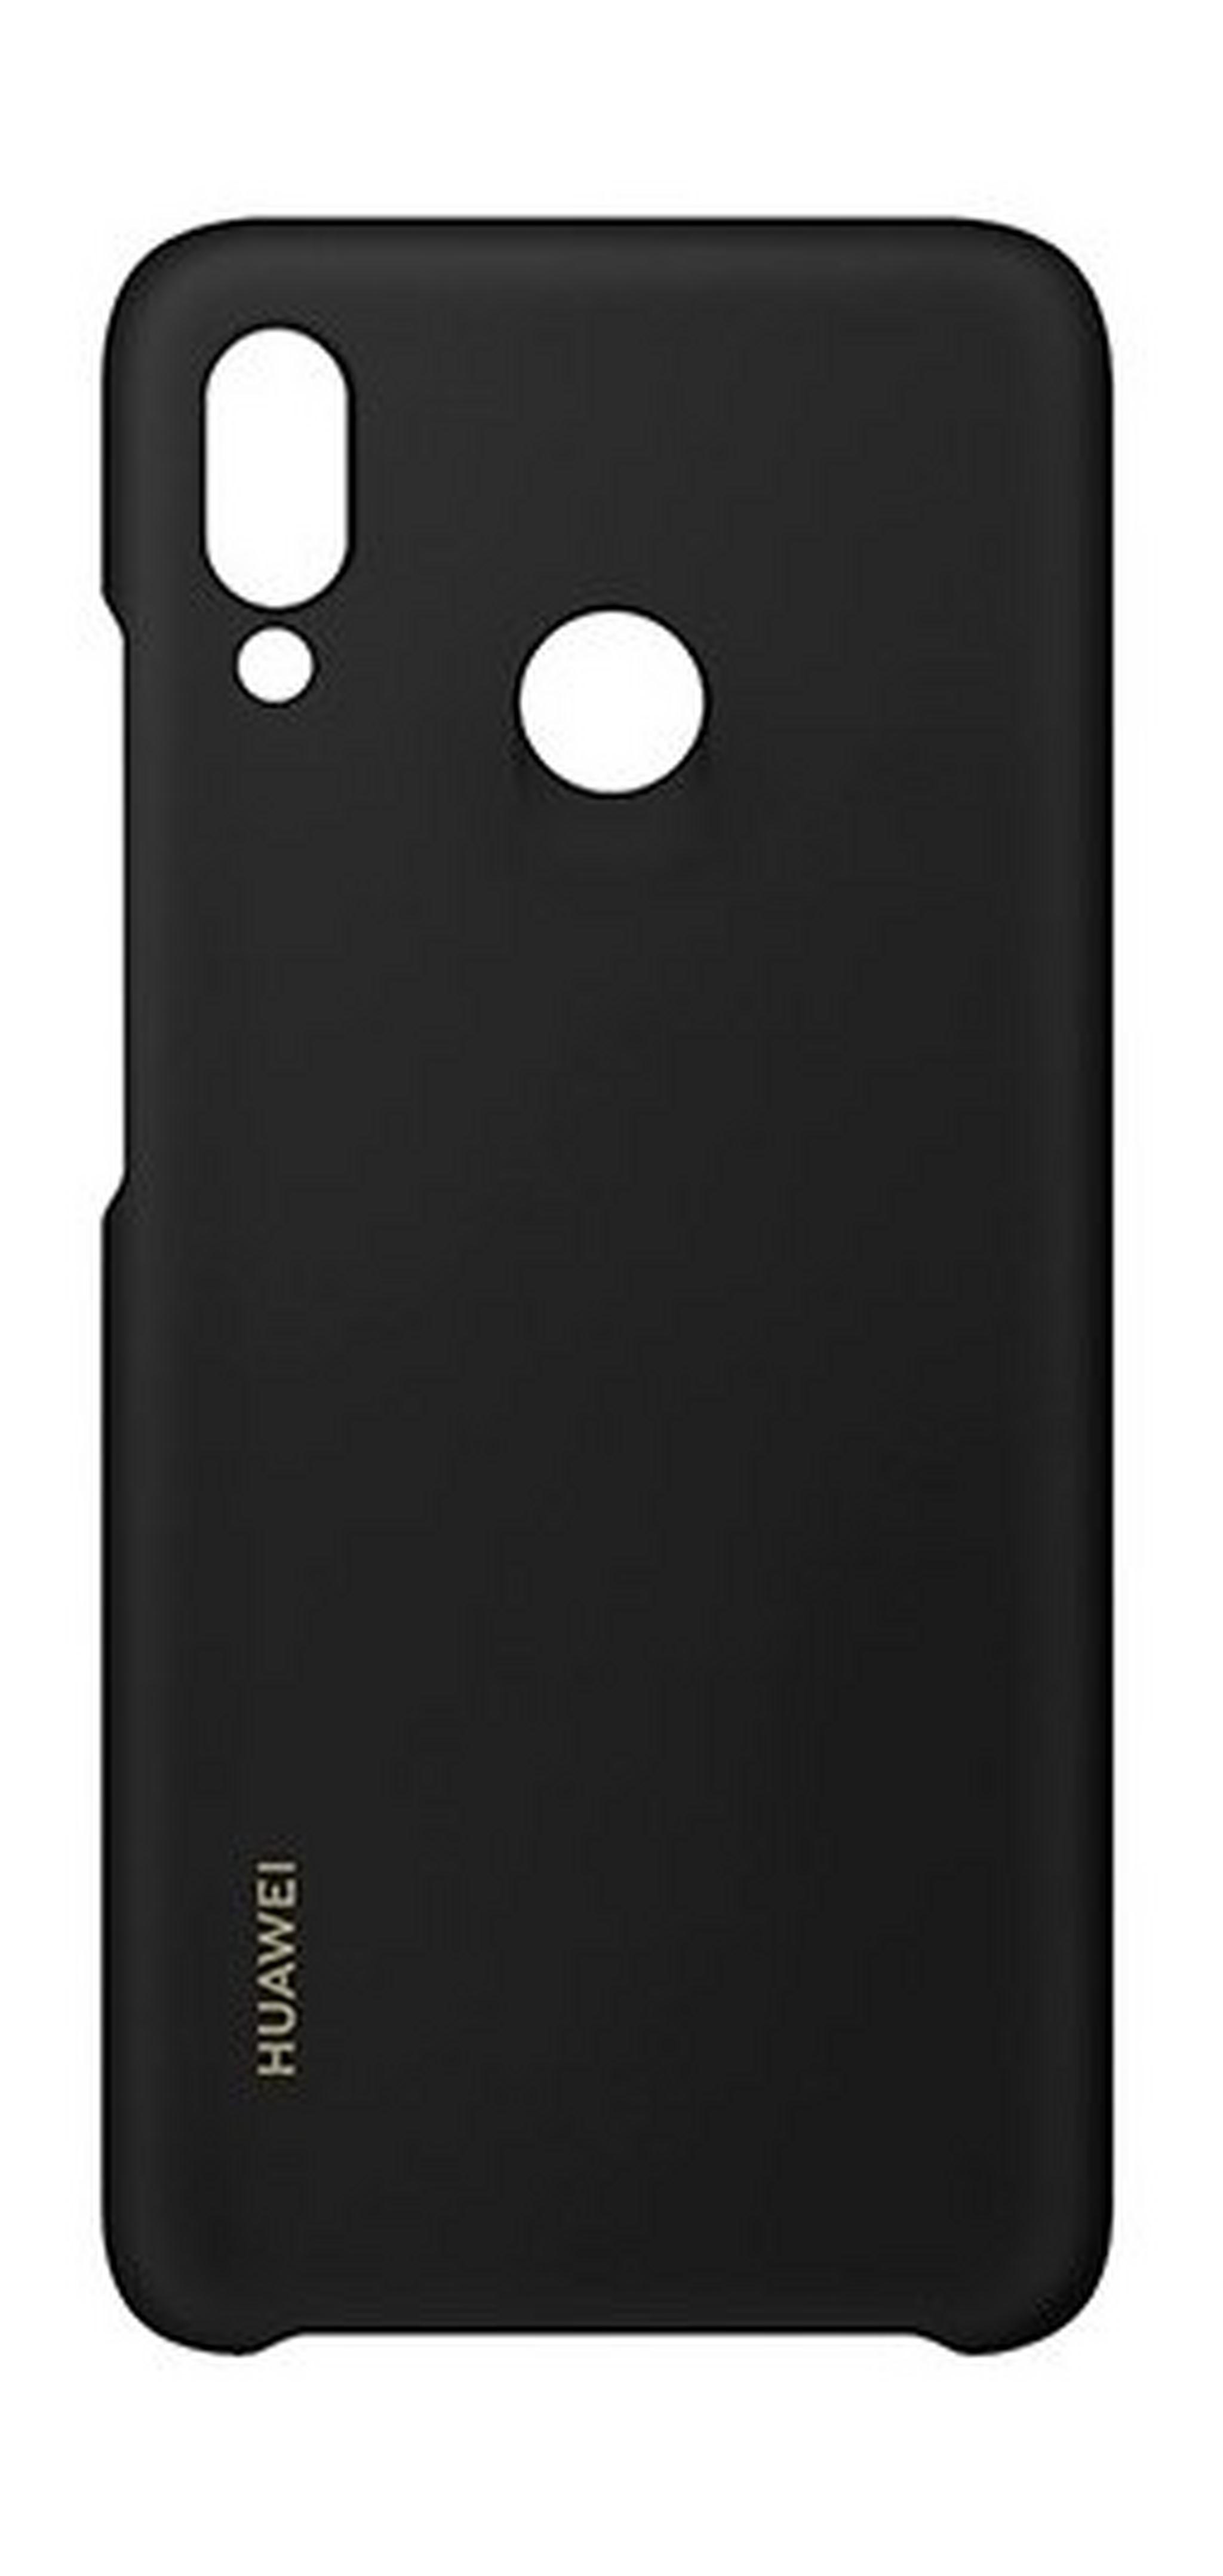 Huawei Nova 3 Protective Back Case (51992583) - Black